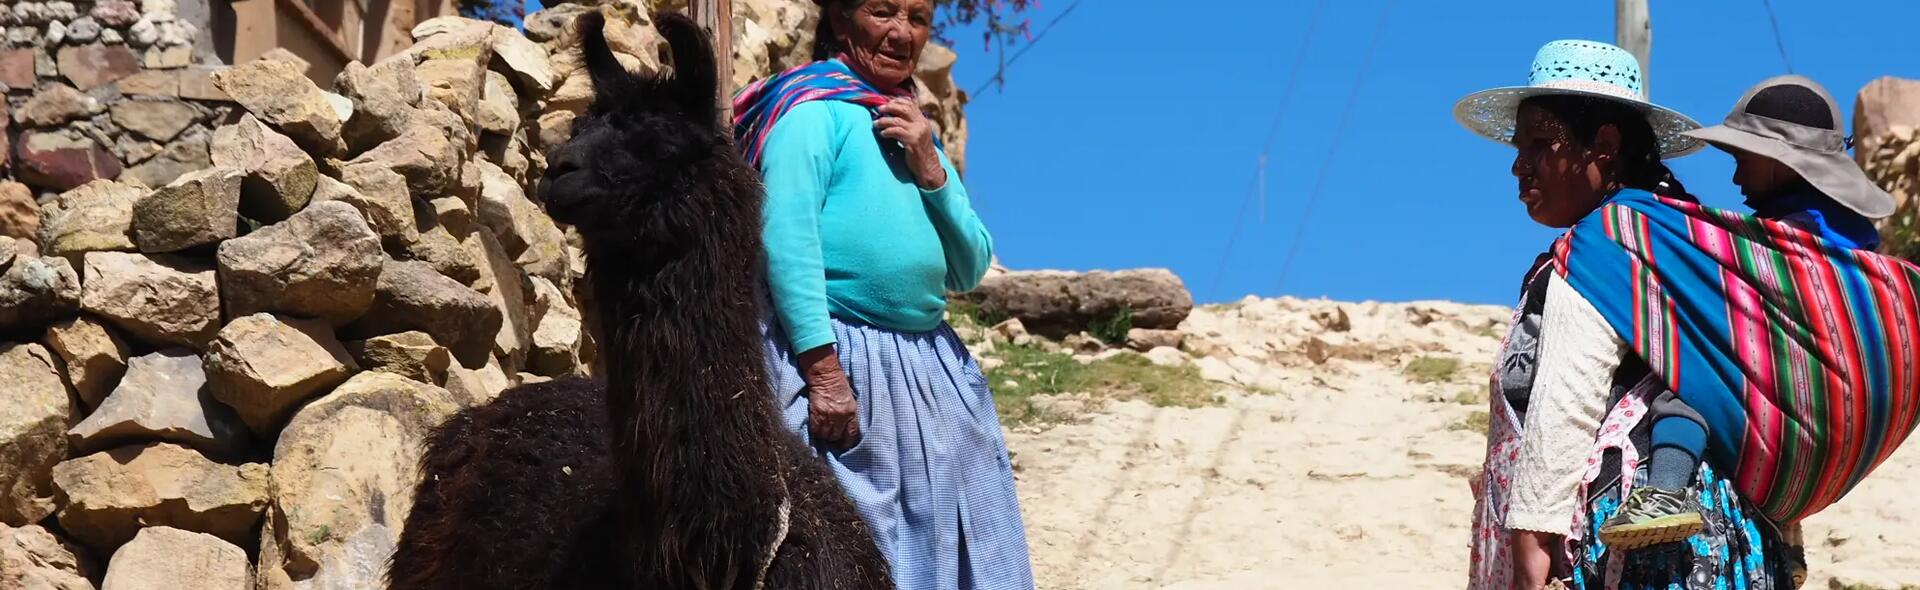 Peru Chile women 